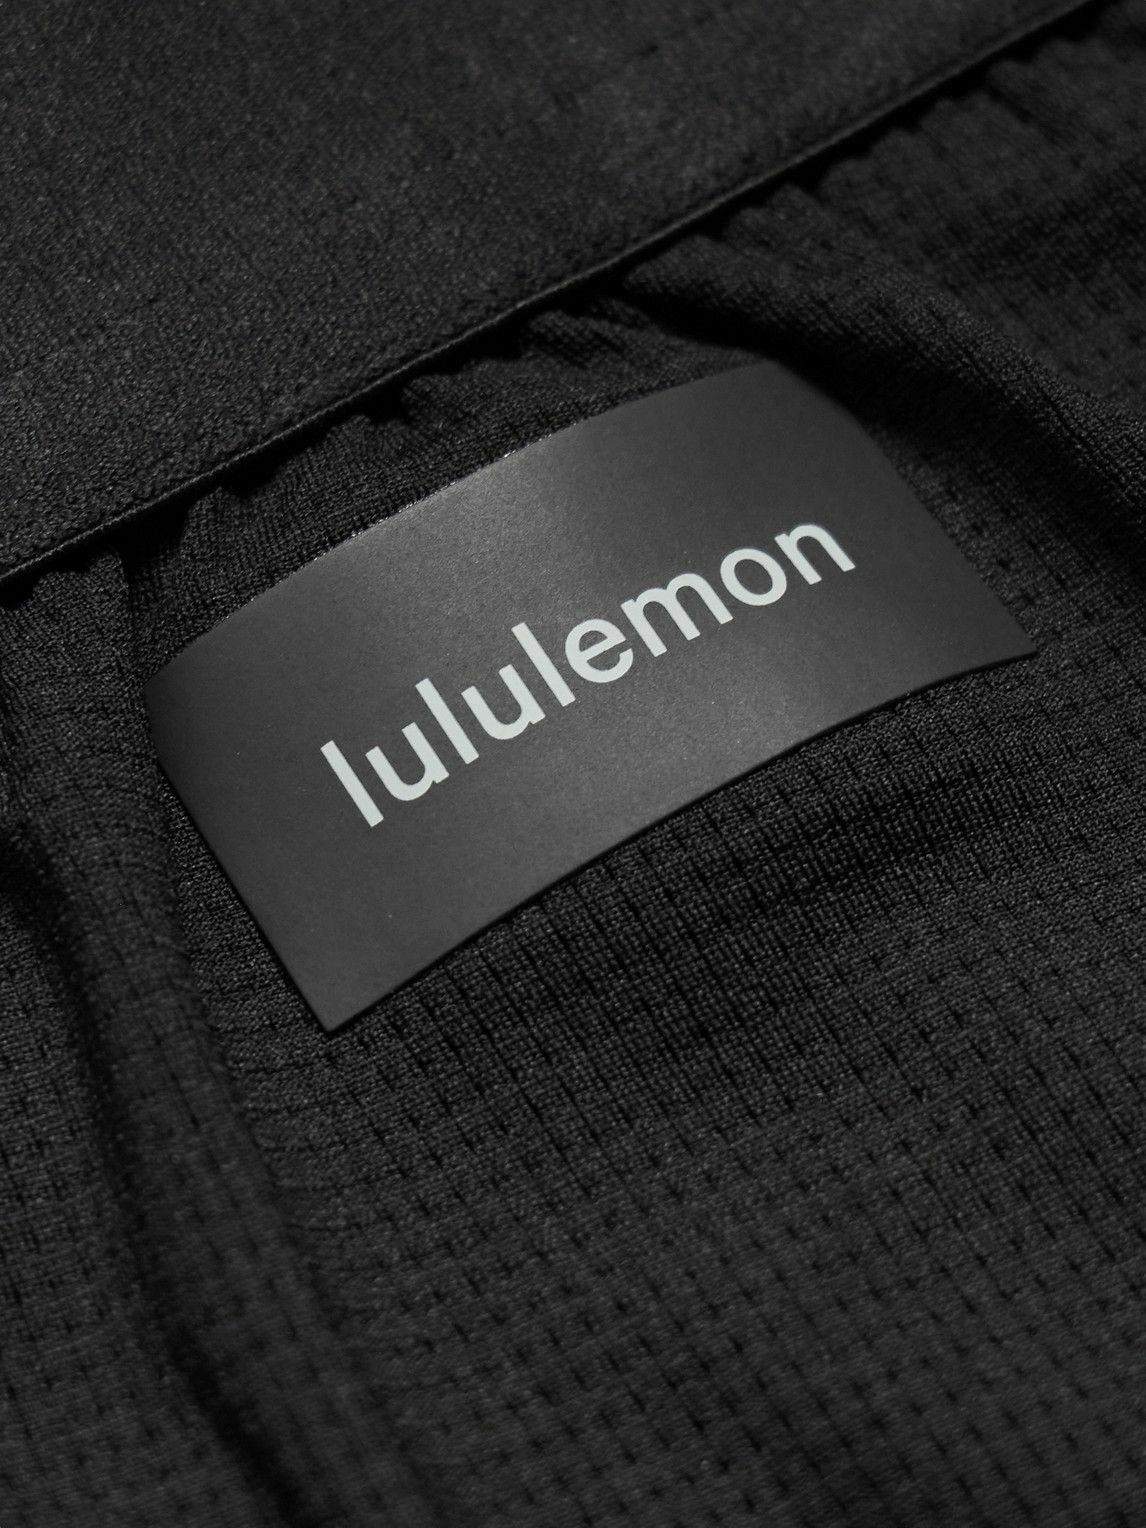 Lululemon - Steady State Straight-Leg Cotton-Blend Jersey Sweatpants - Blue  Lululemon